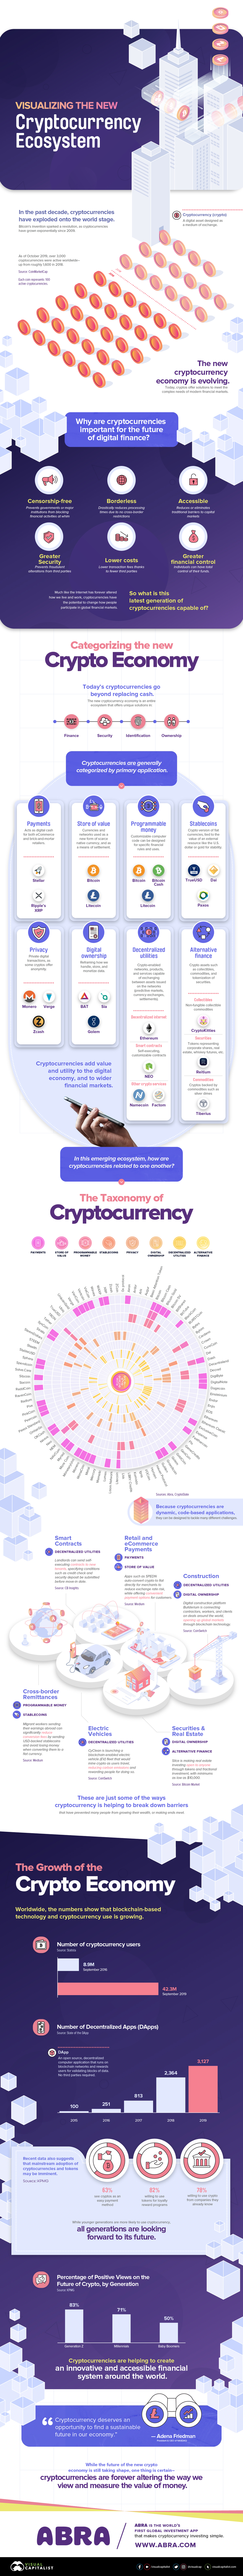 Visualizing the Cryptocurrency Ecosystem